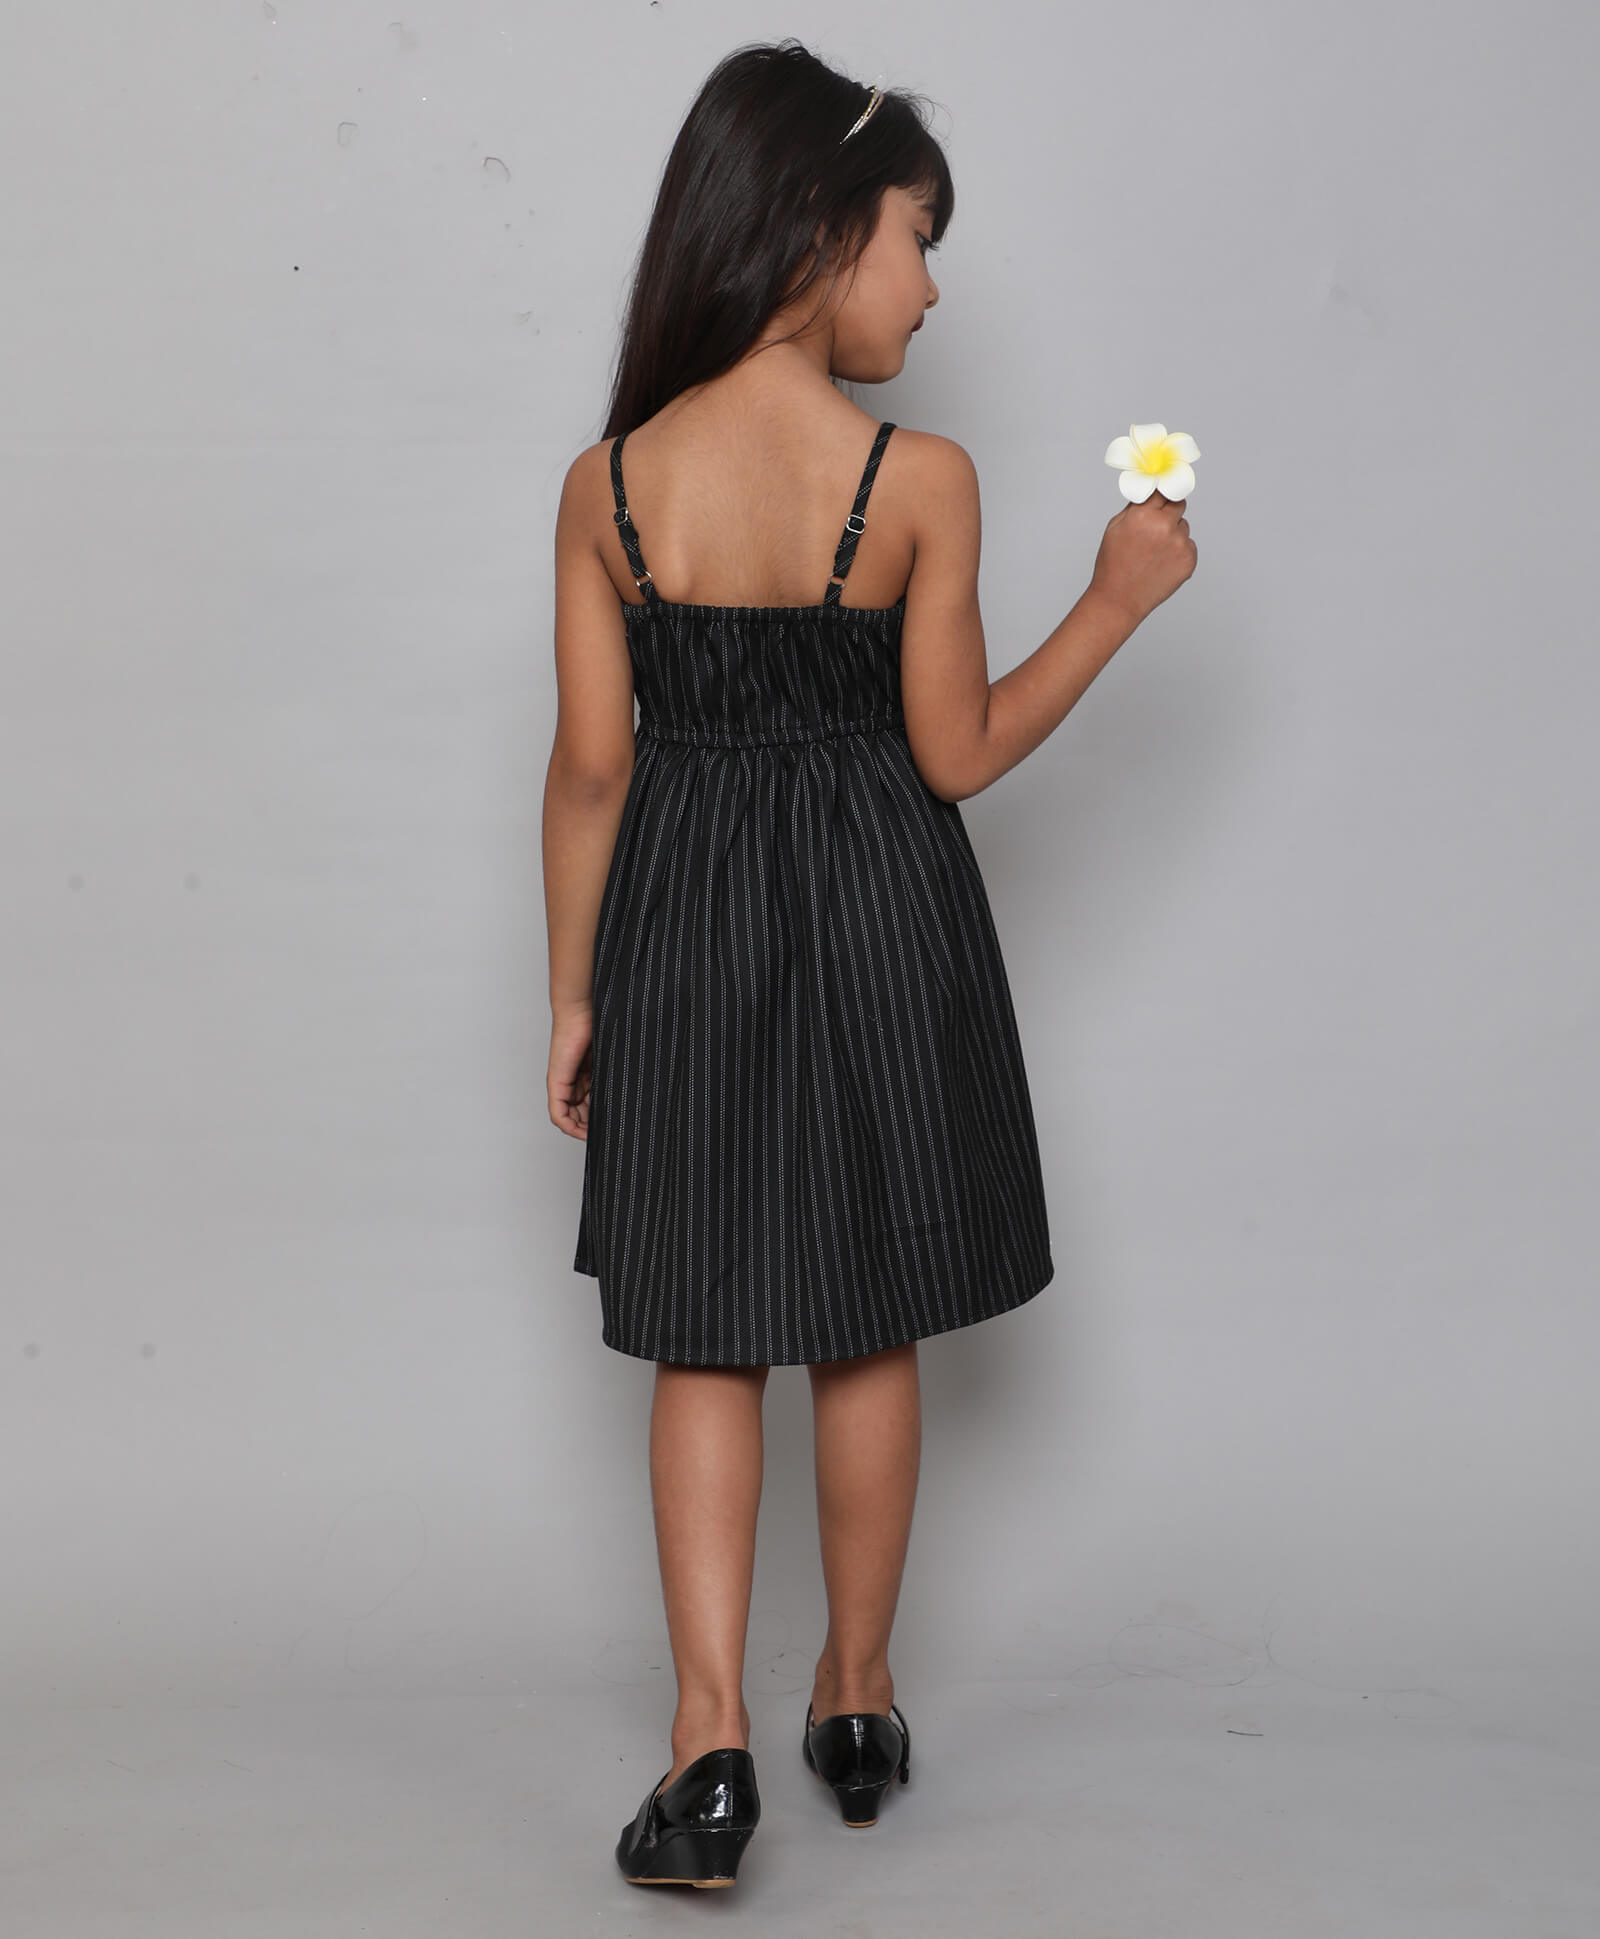 Shop Girls Black Strips Printed Overlap Singlet Dress Online